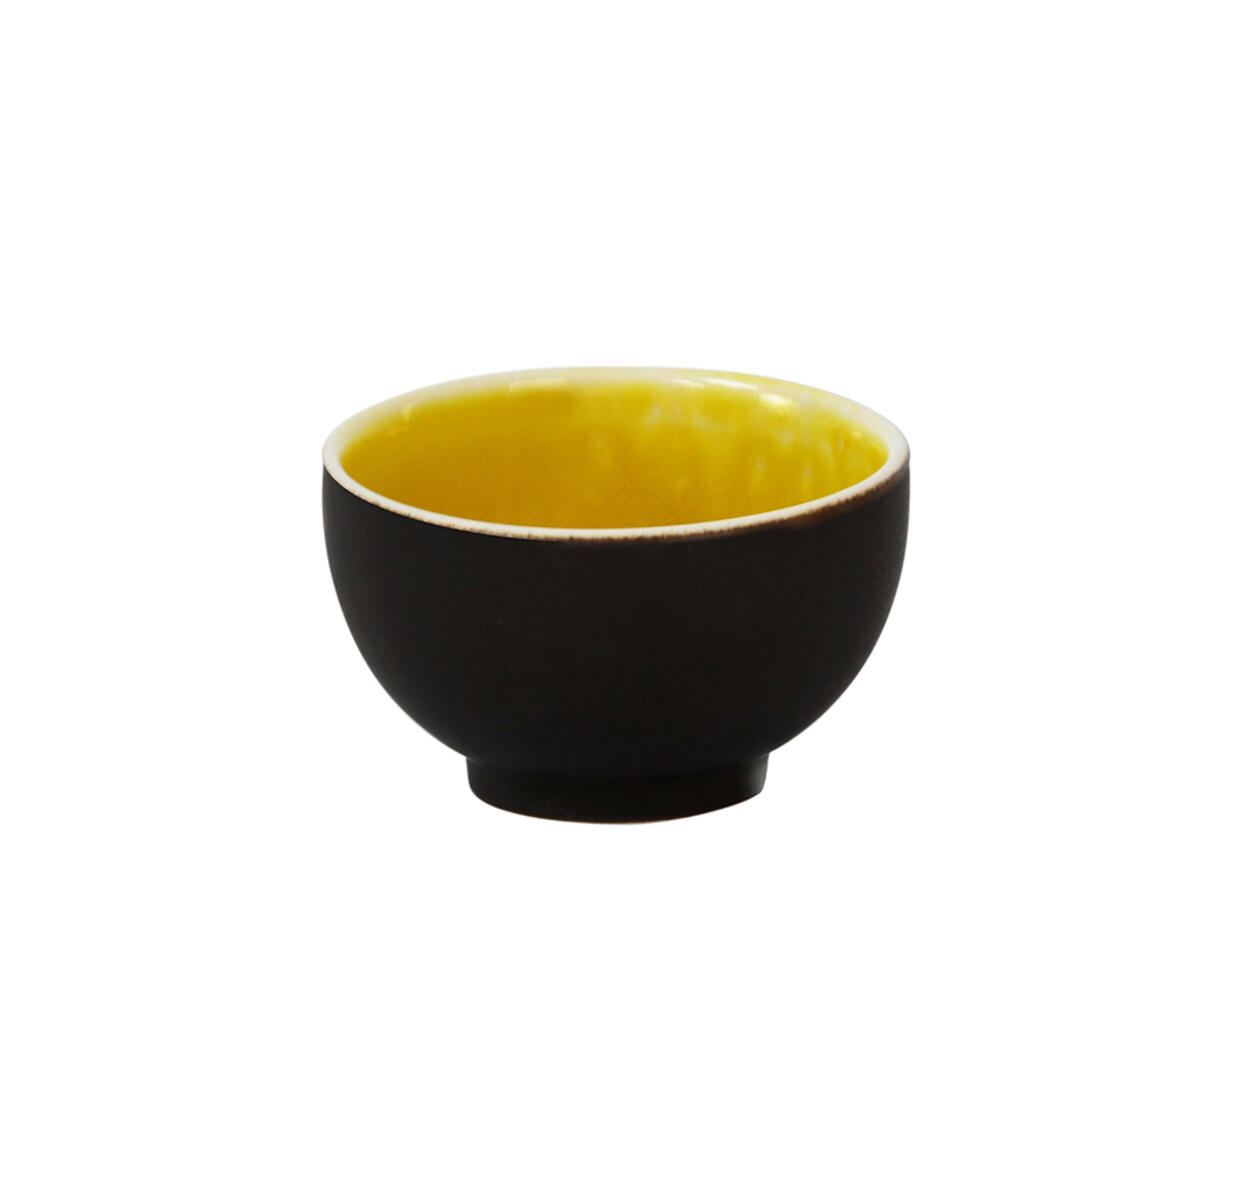 bowl m tourron citron ceramic manufacturer